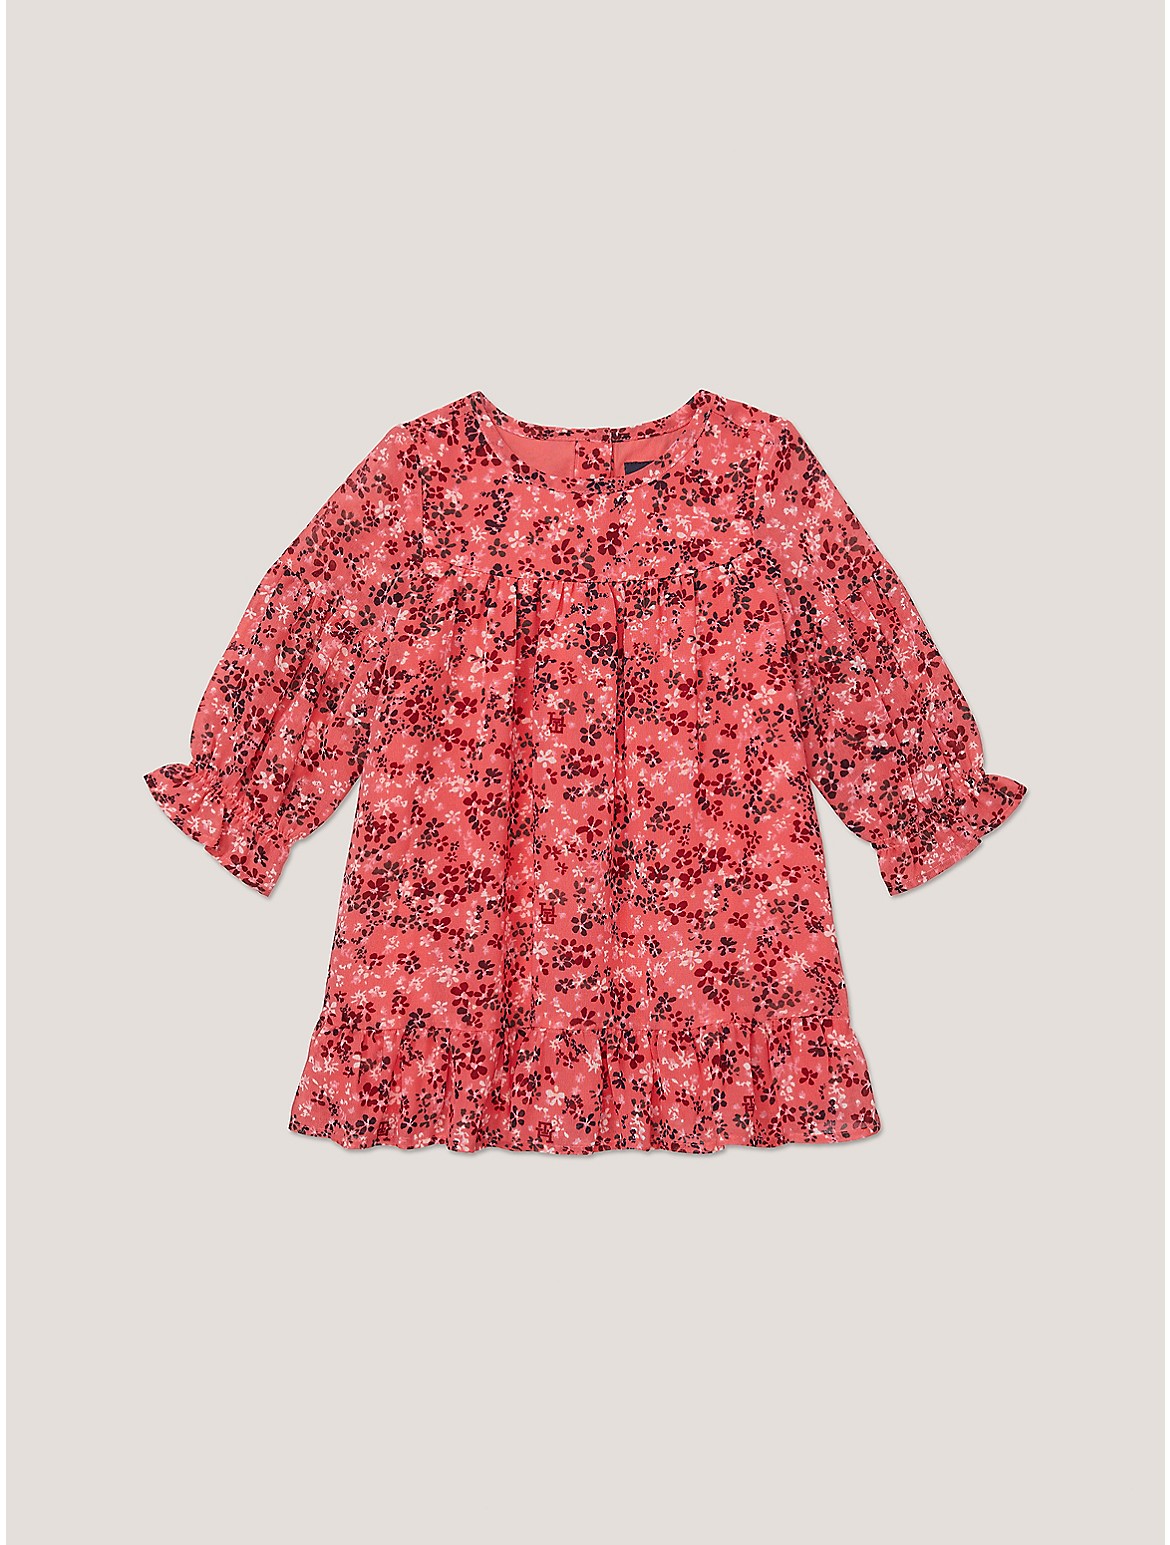 Tommy Hilfiger Girls' Babies' Floral Print Dress - Pink - 3-6M